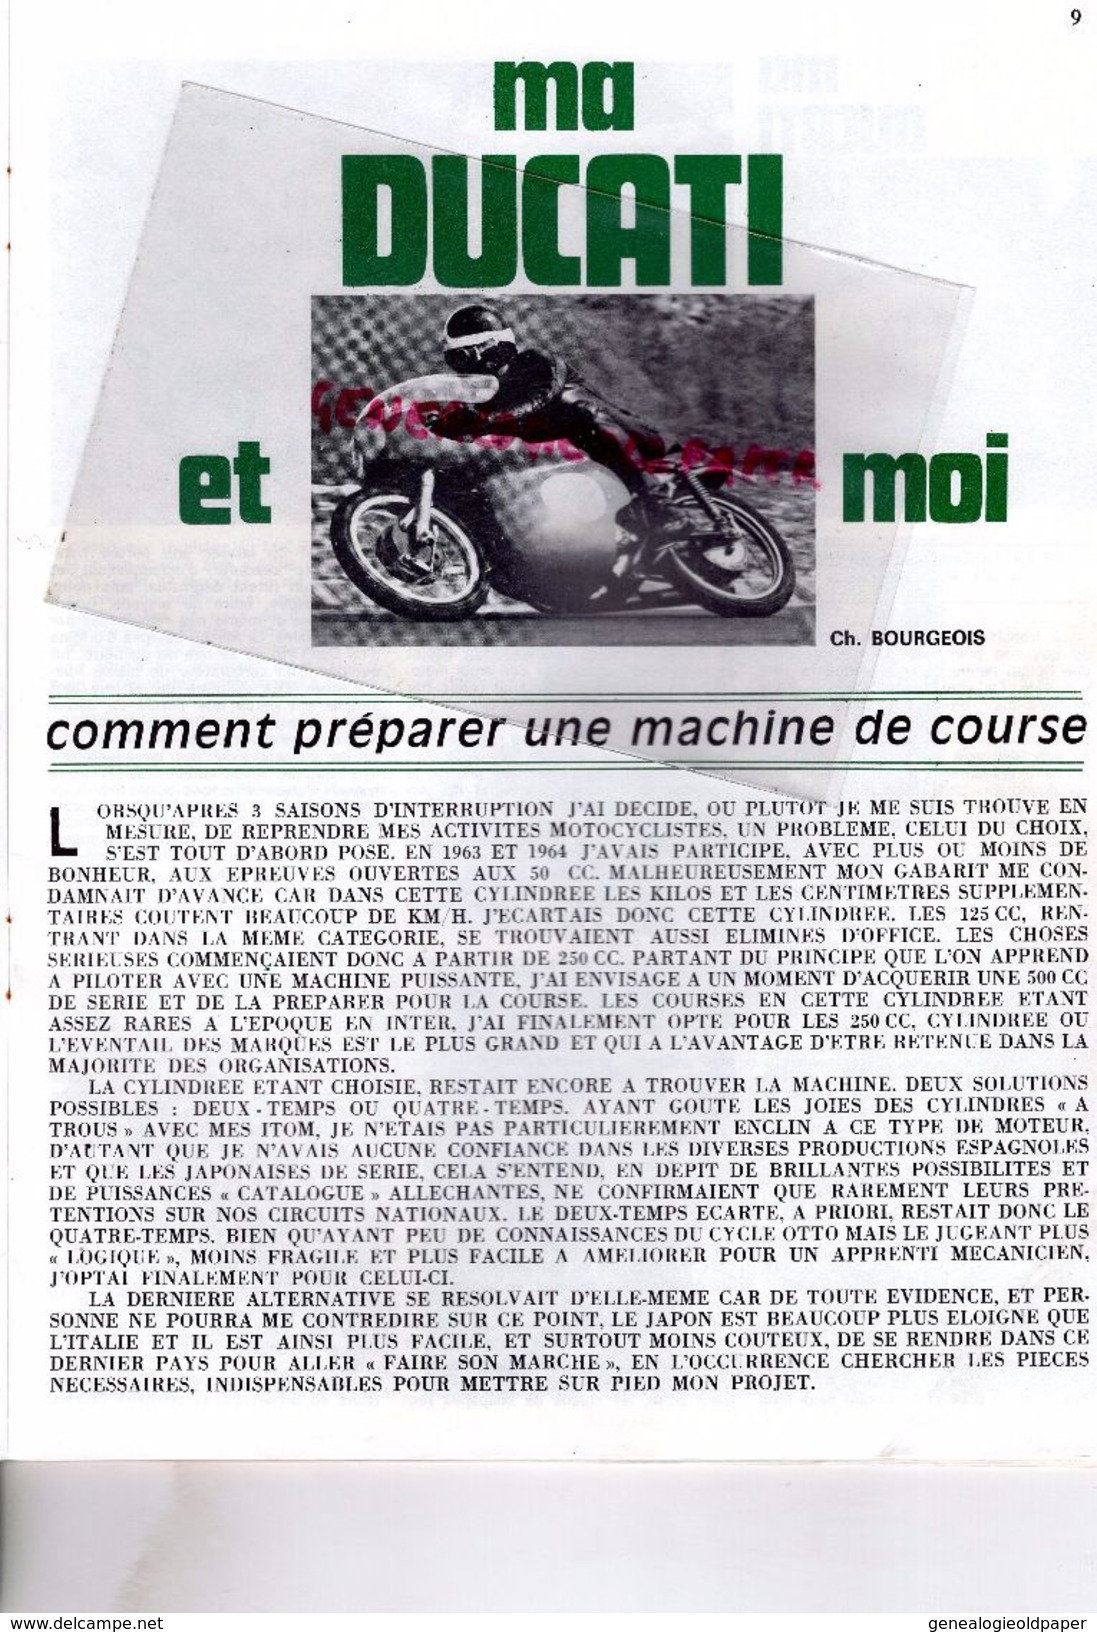 MOTO REVUE N° 1963-JANVIER 1970-ELEPHANTS NURBURGRING-DUCATI CH. BOURGEOIS-1000 VINCENT BLACK LIGHTNING-LOUBET CHANCENAY